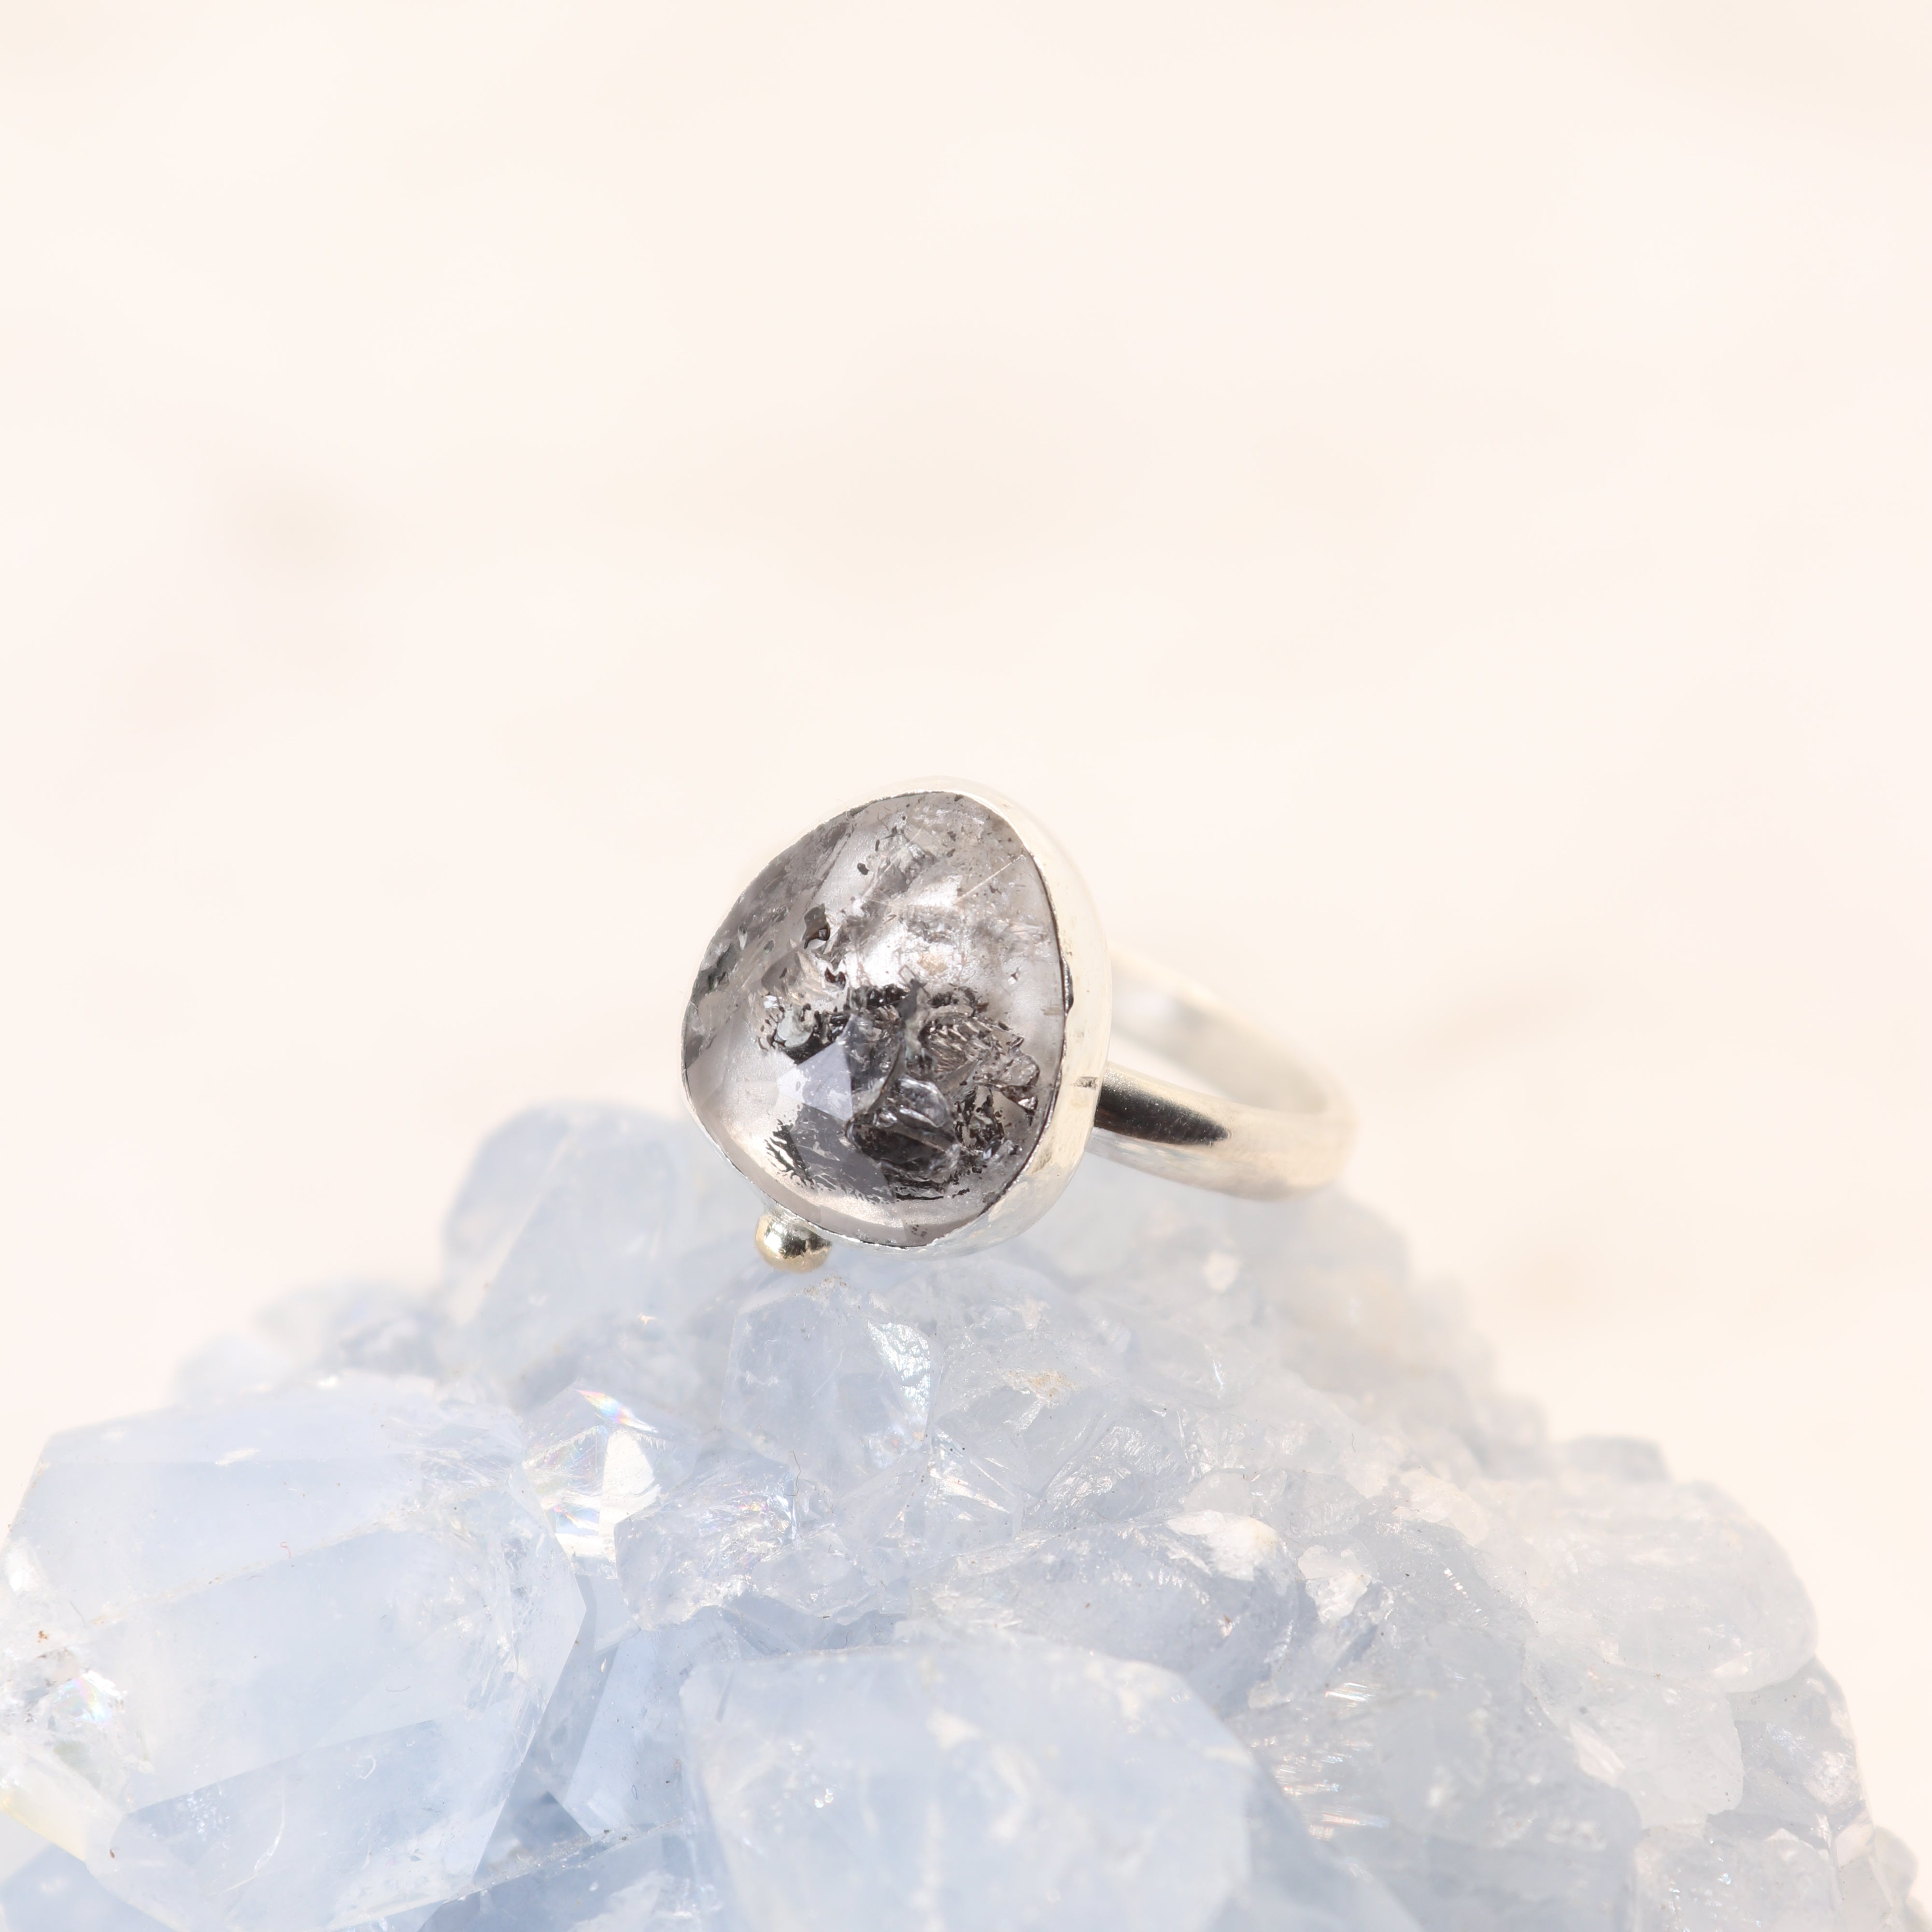 Tibetan quartz gemstone ring